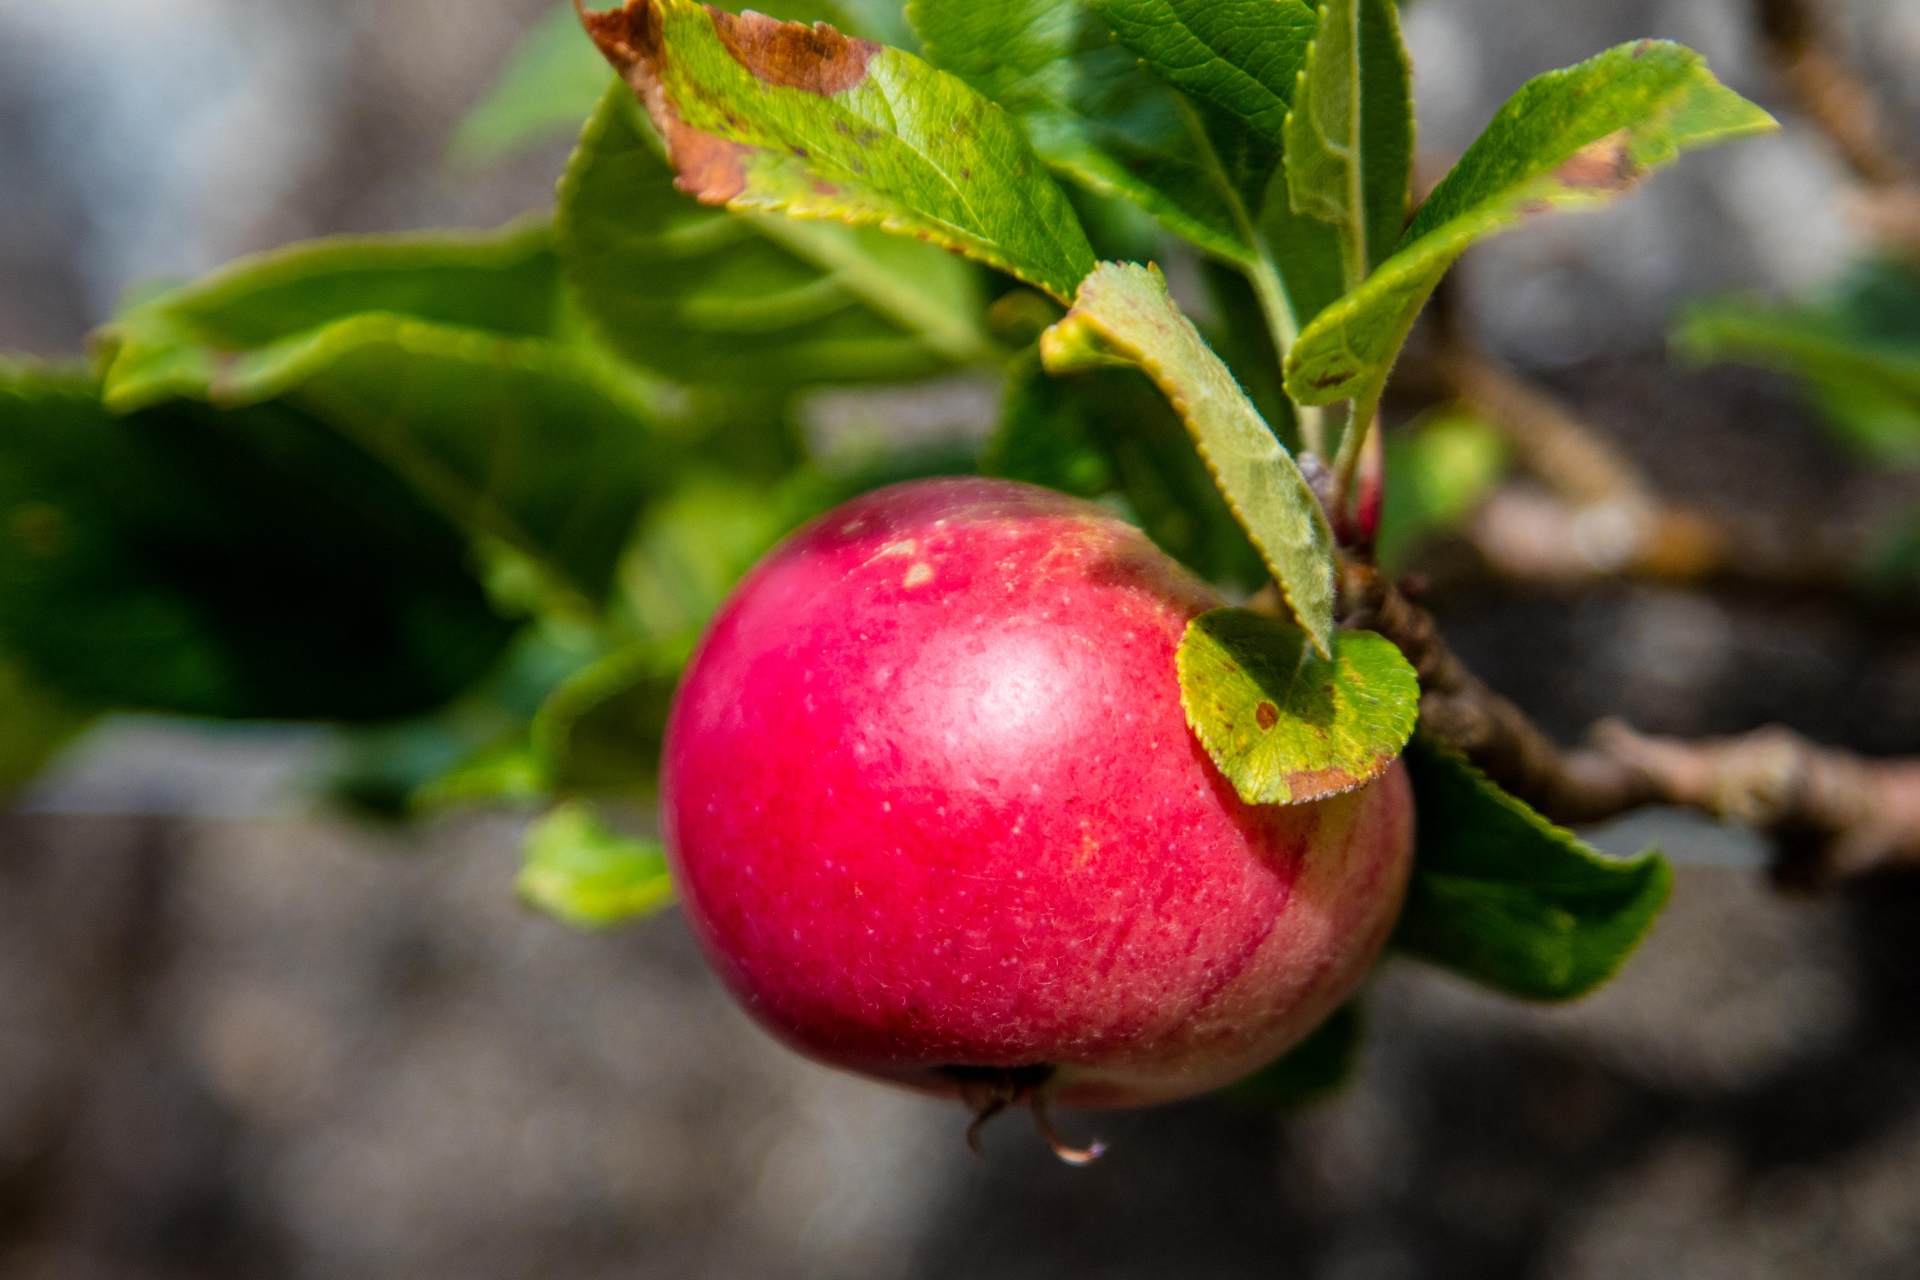 Pick apple & quince in season